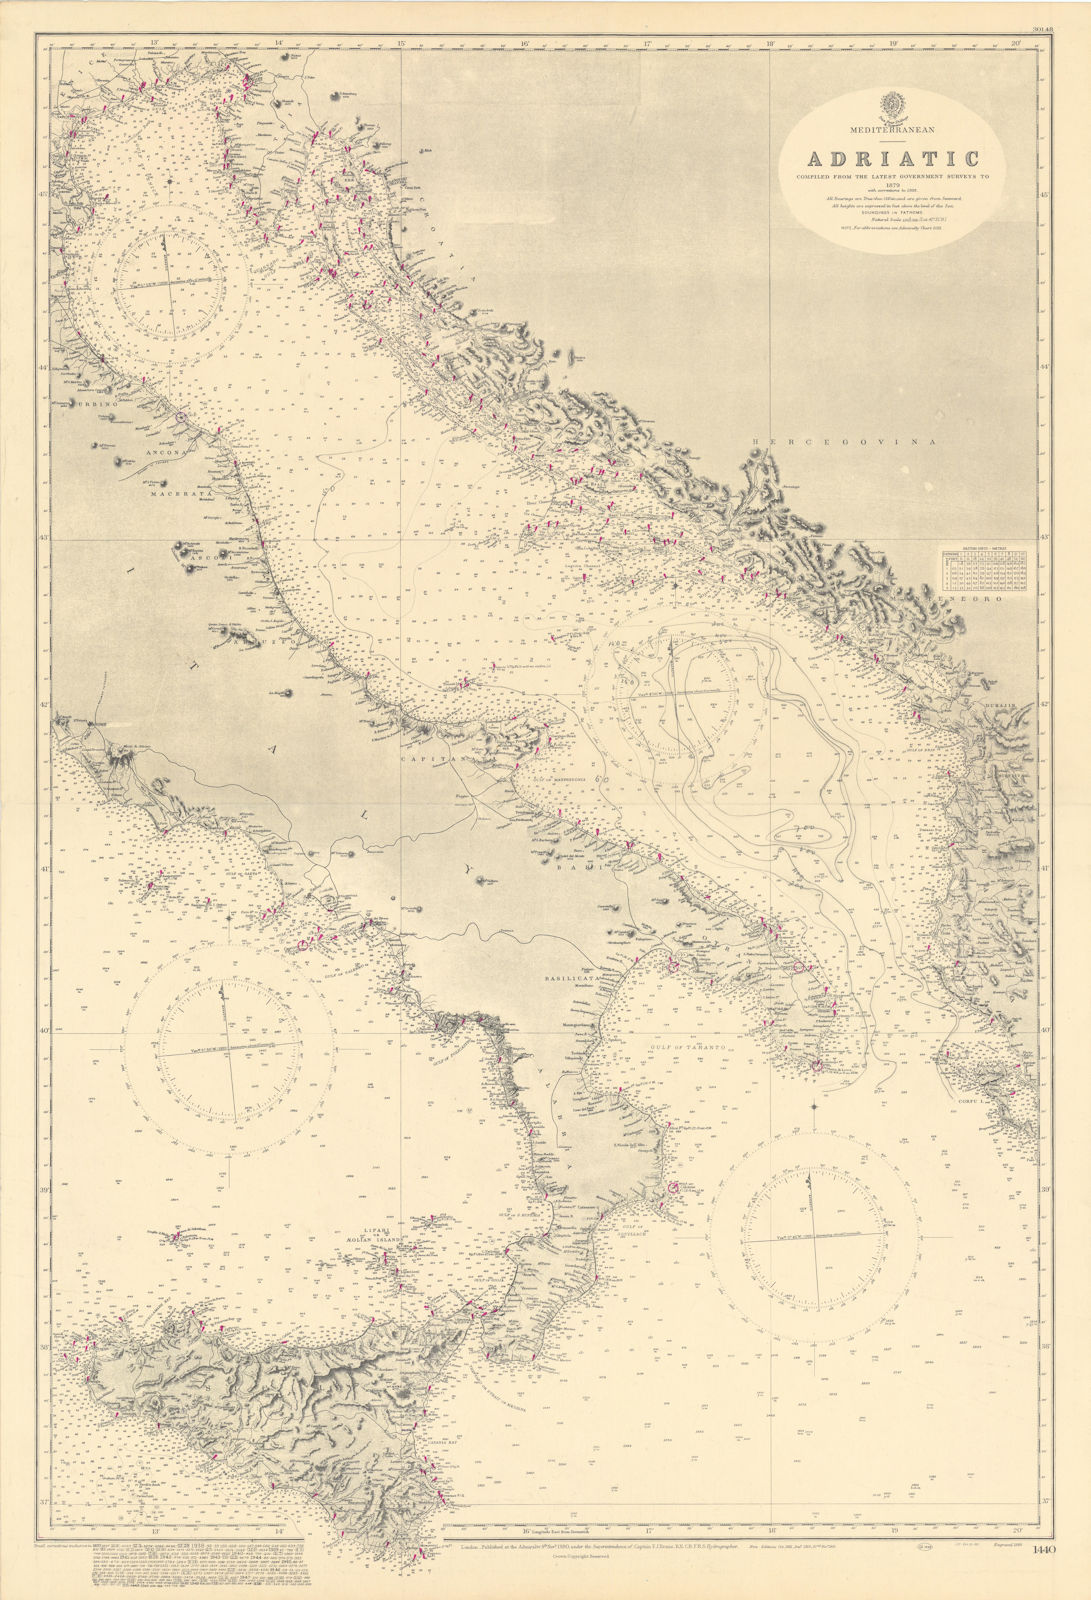 Associate Product Mediterranean Adriatic Italy Croatia. ADMIRALTY sea chart 1880 (1949) old map